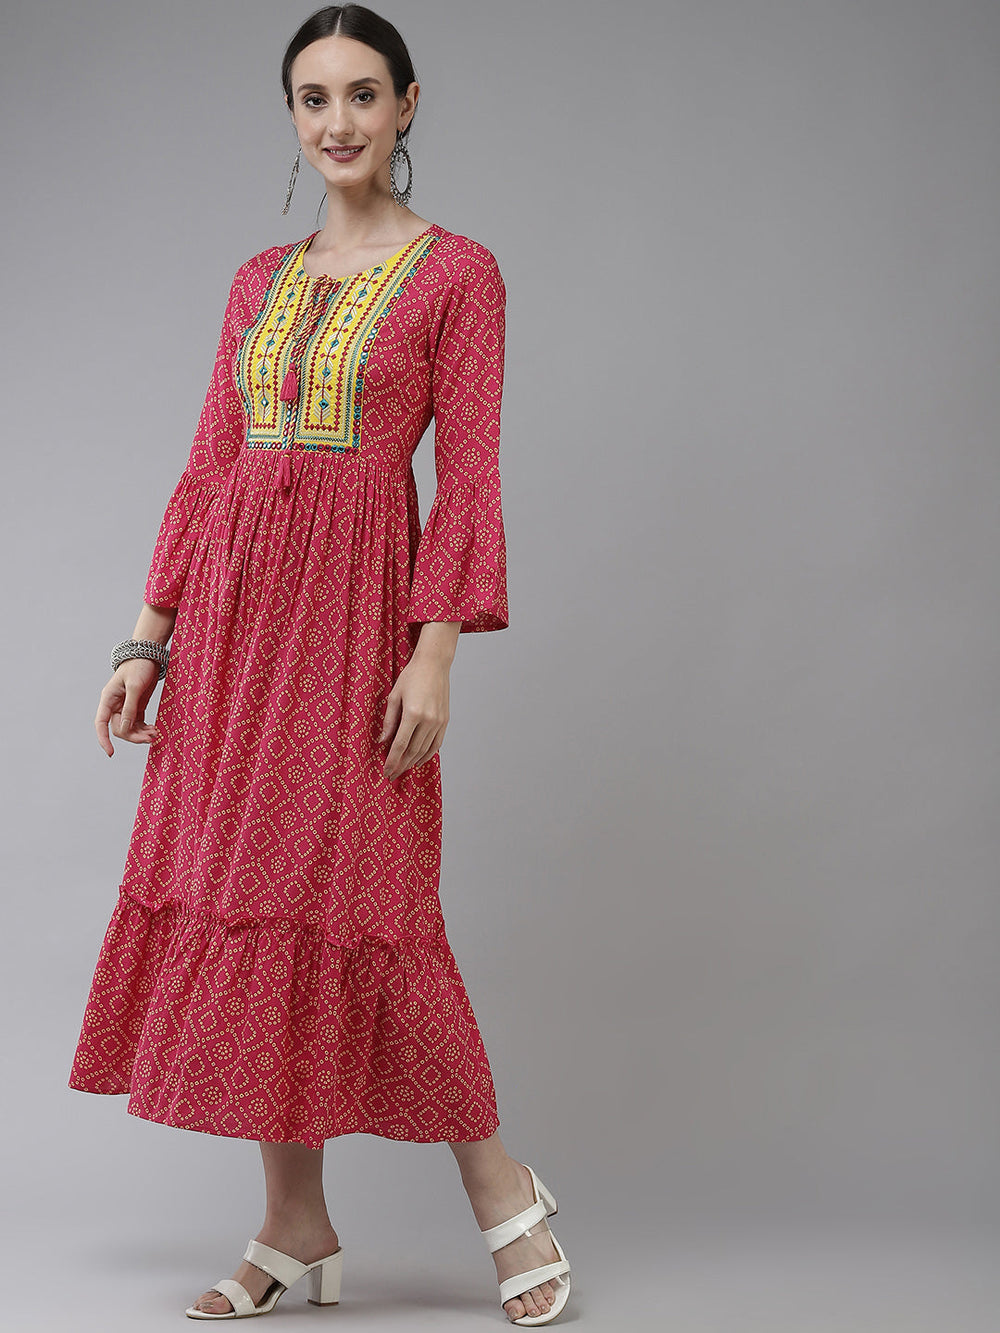 Pink & Yellow Ethnic Motifs Ethnic Dress Yufta Store